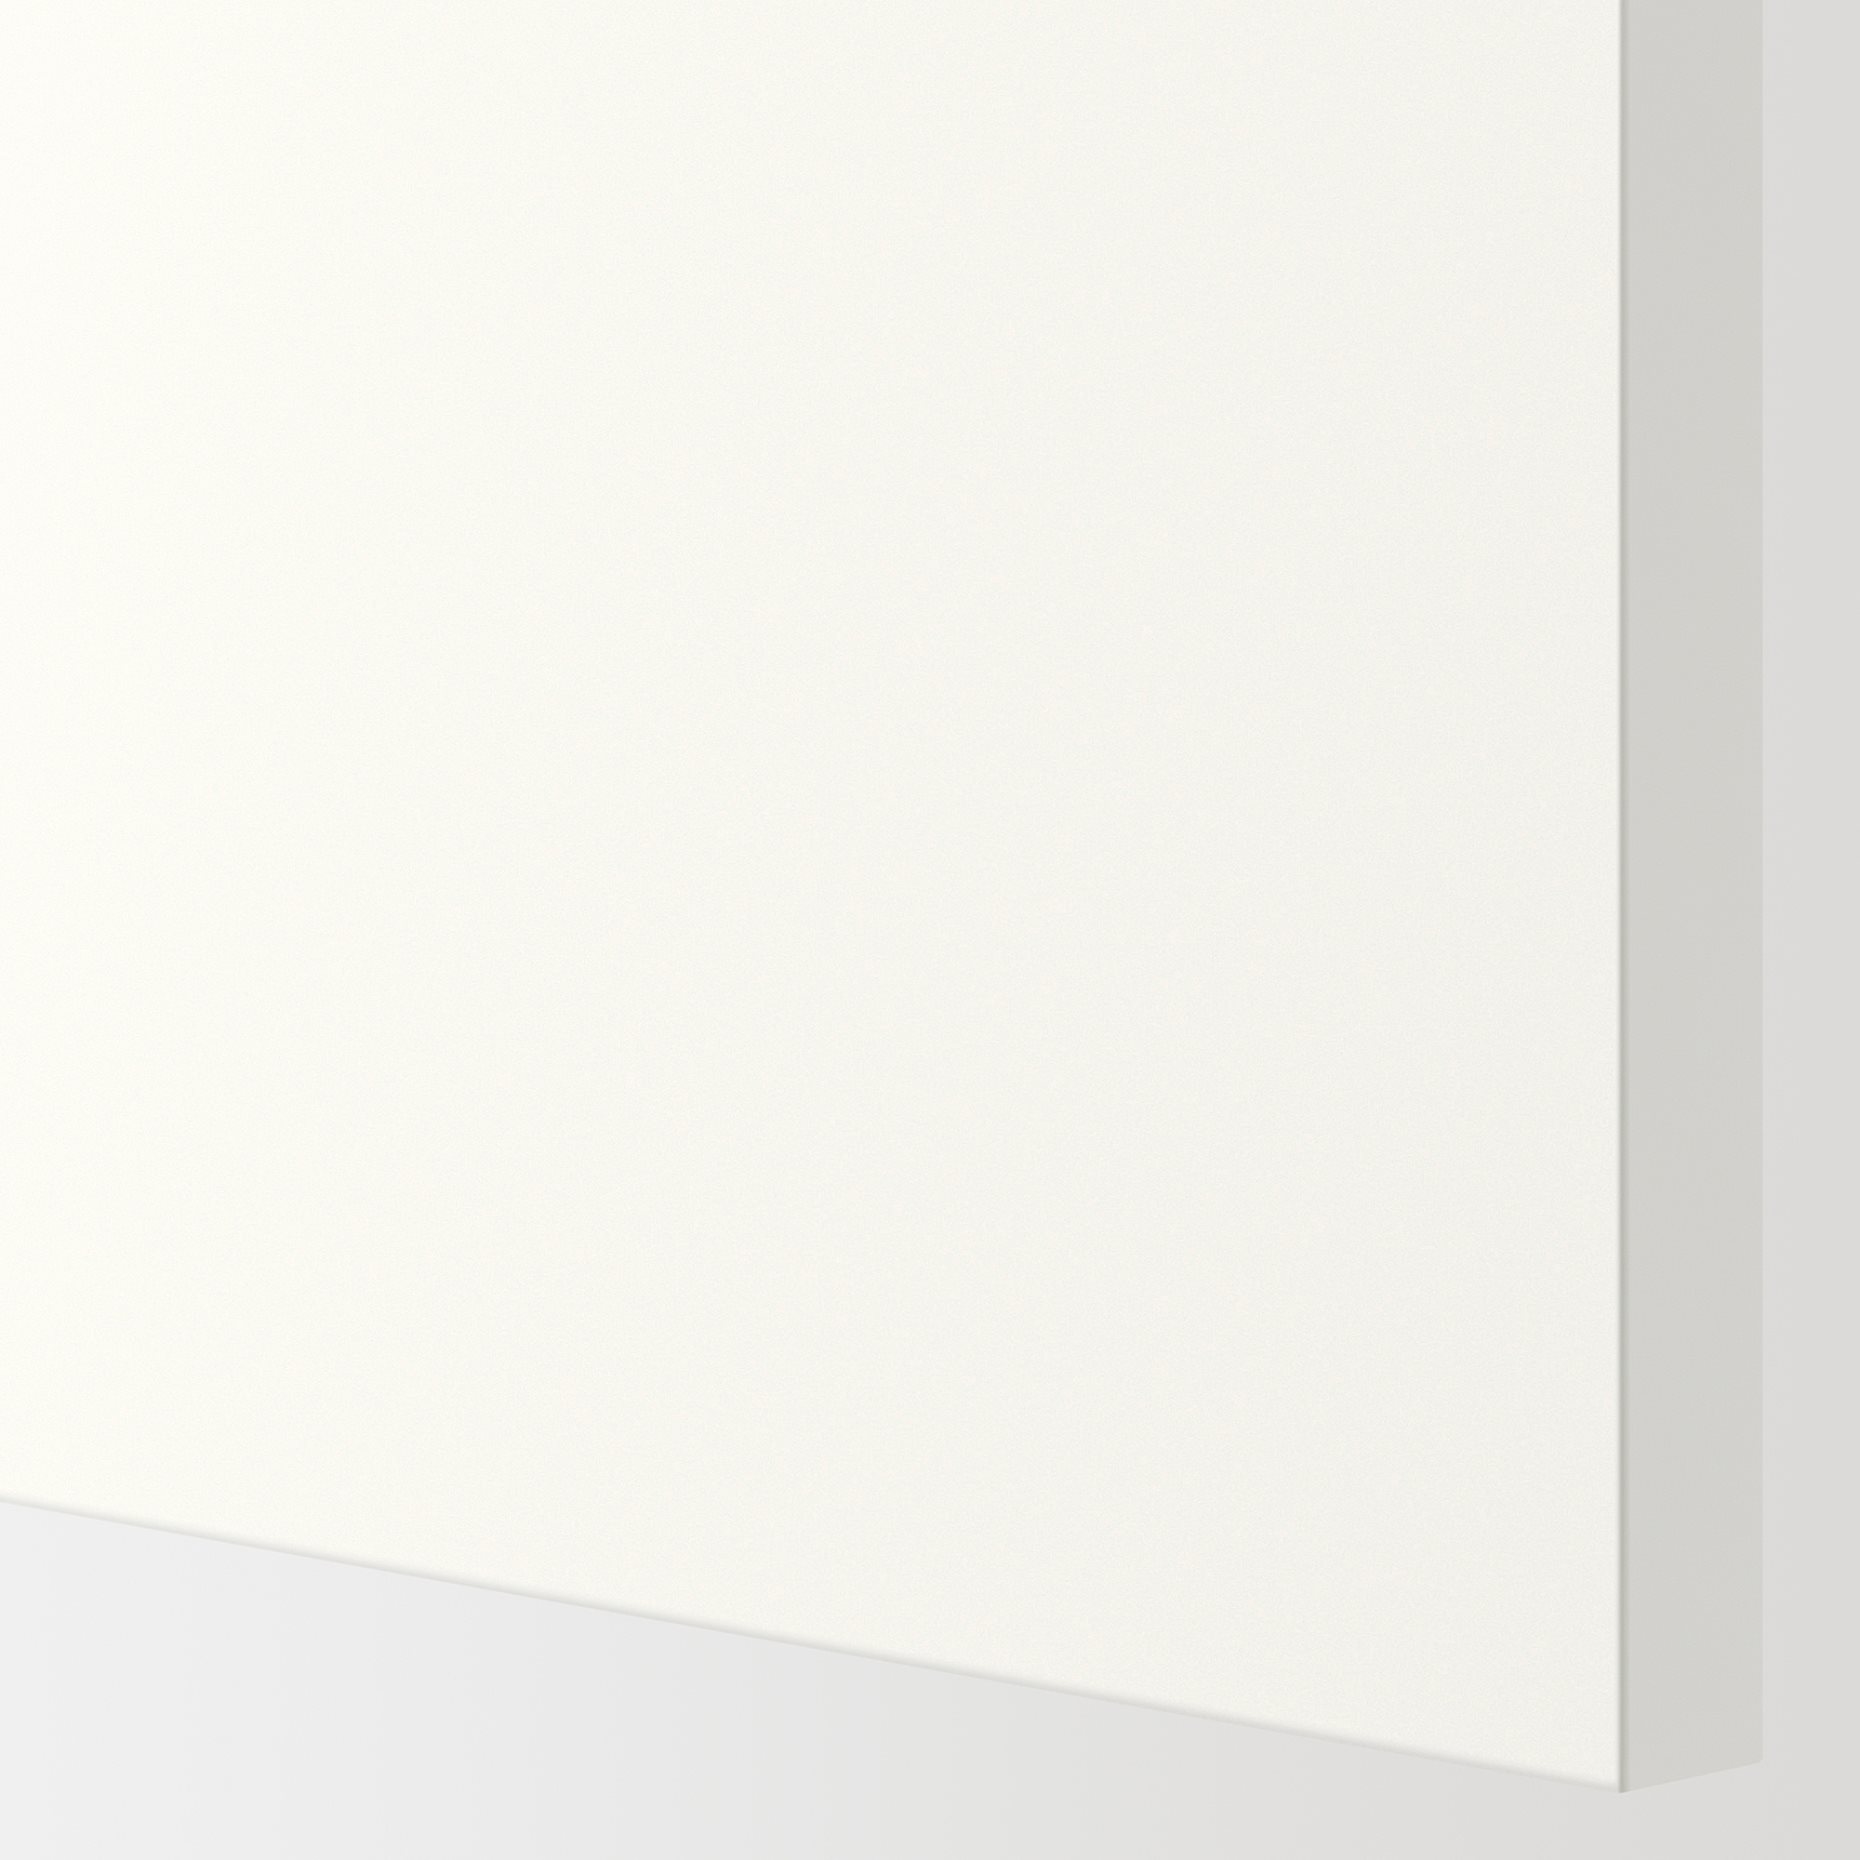 METOD, ντουλάπι τοίχου, 60x40 cm, 295.072.54